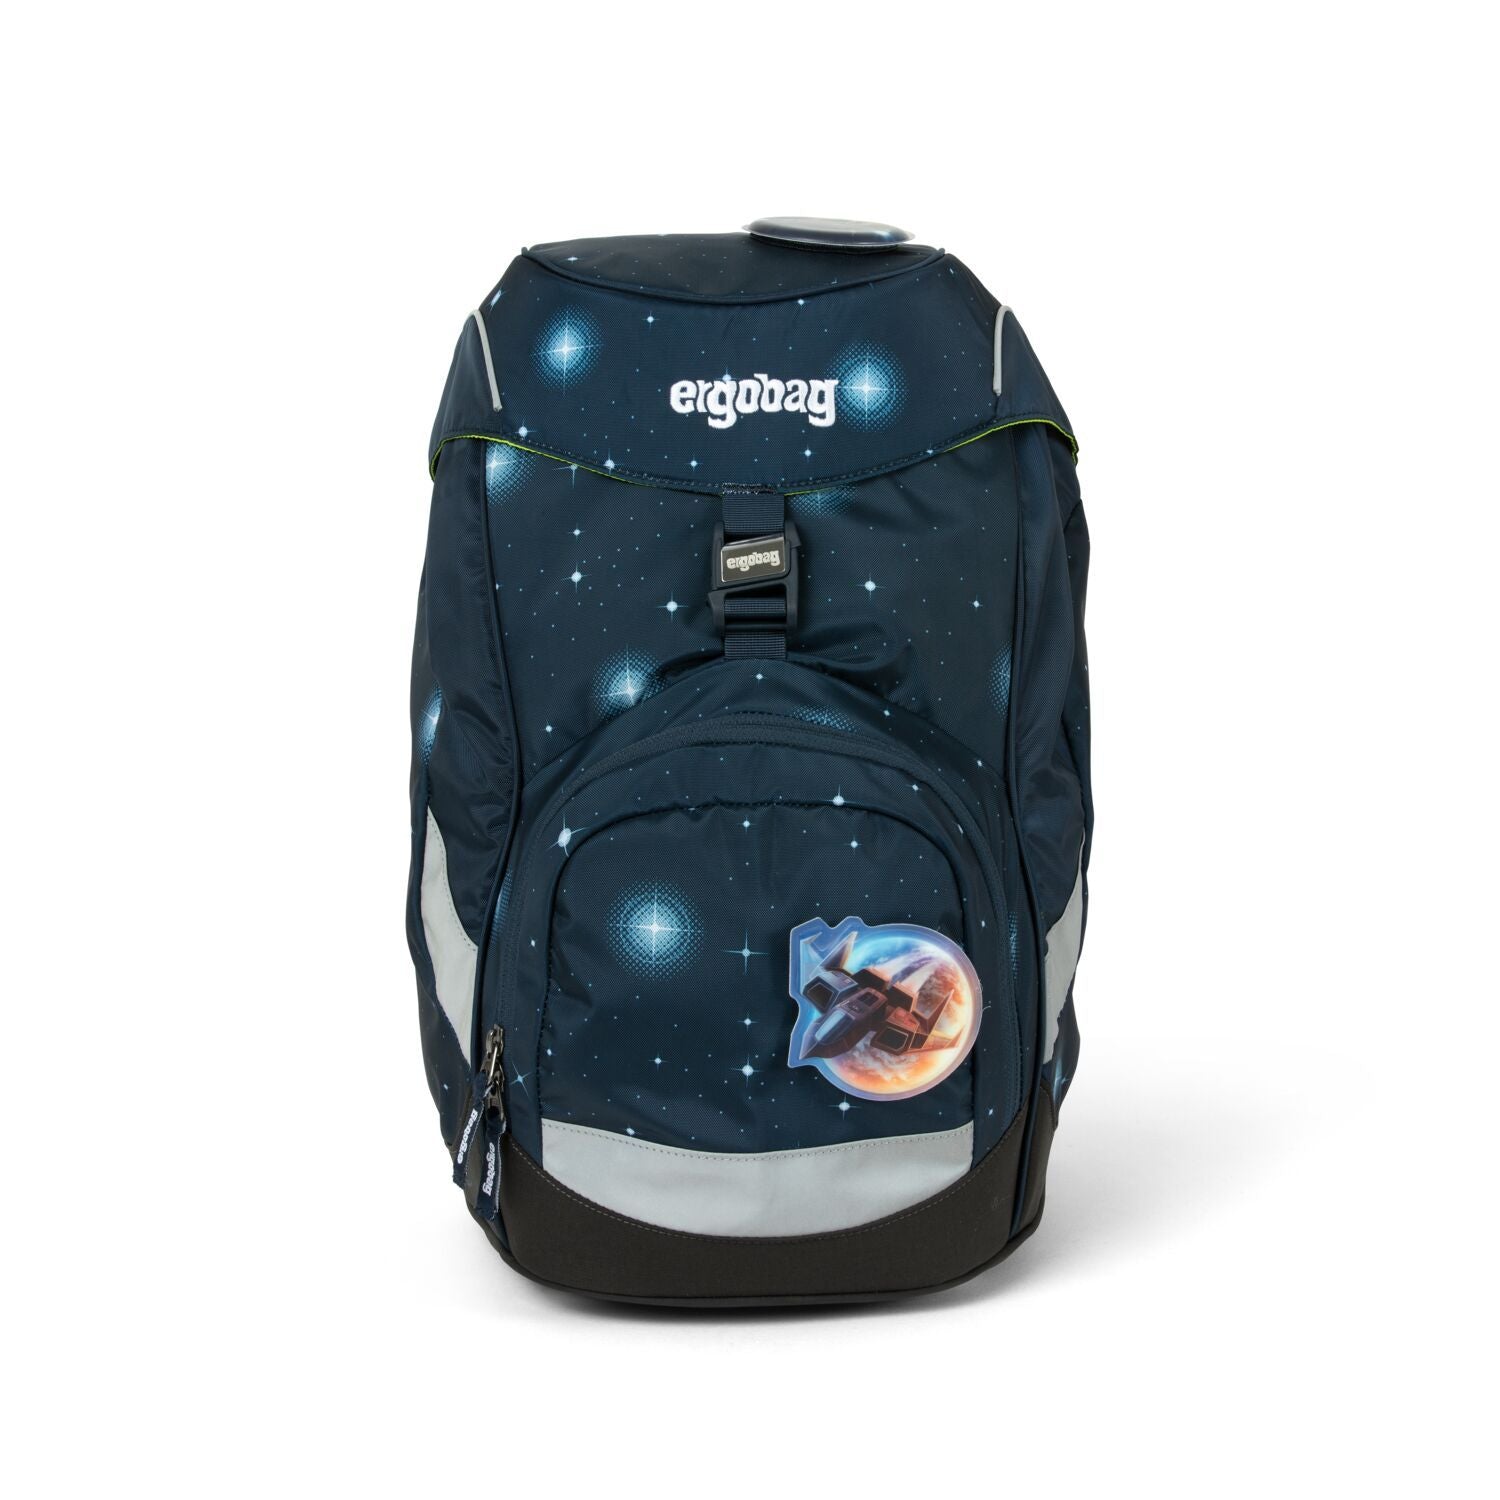 Buy ARB BAGS | Move in Style | Laptop Backpack | School Bag, Office Bag,  College Bag, Daily Backpack, Waterproof Backpack Bag, Best Backpack (Red &  Black) at Amazon.in